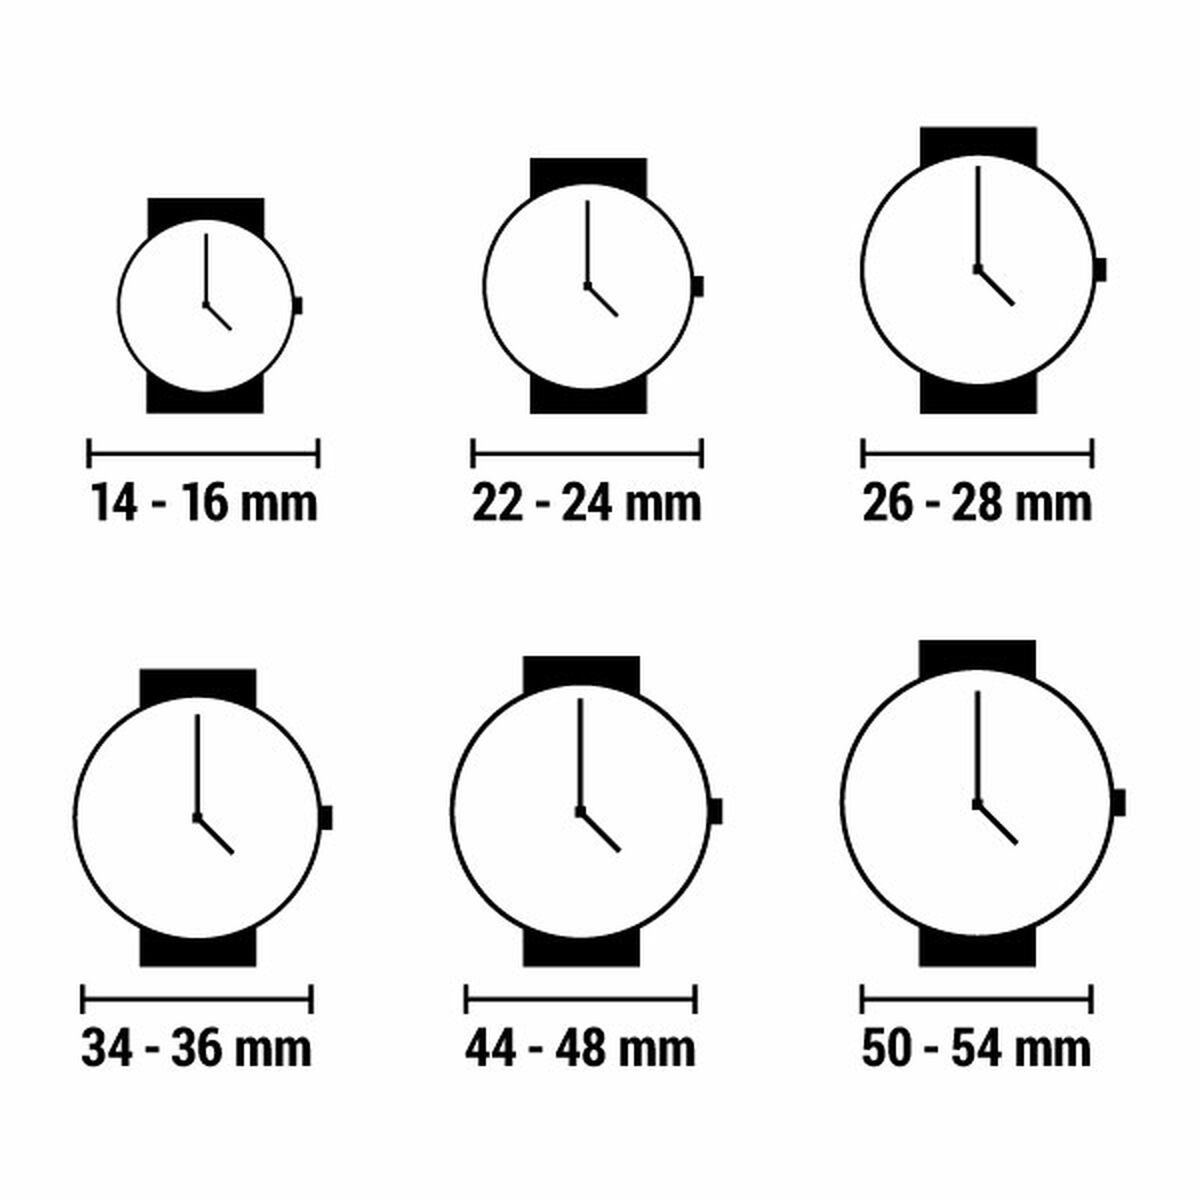 Horloge Dames CO88 Collection 8CW-10080